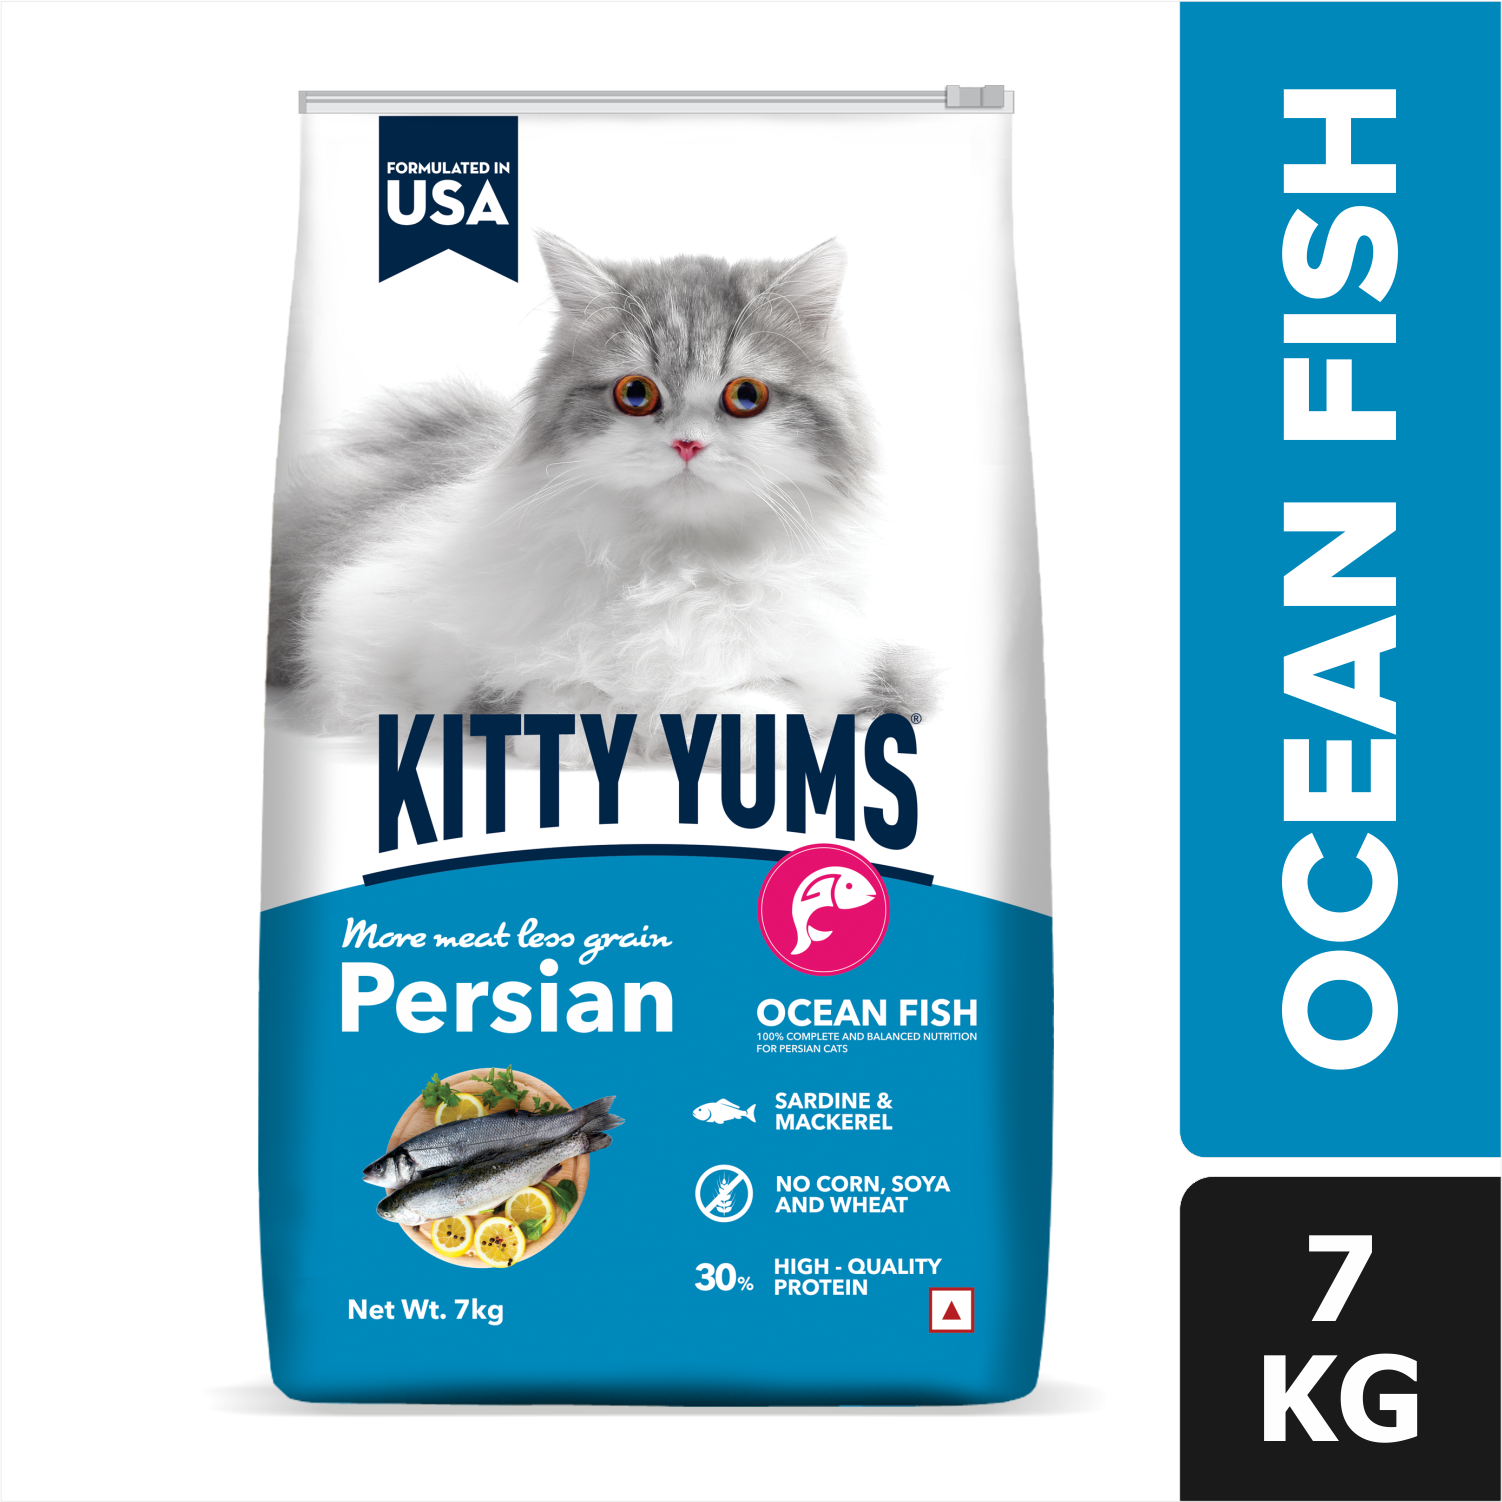 Kitty Yums Ocean Fish Persian Cat Dry Food